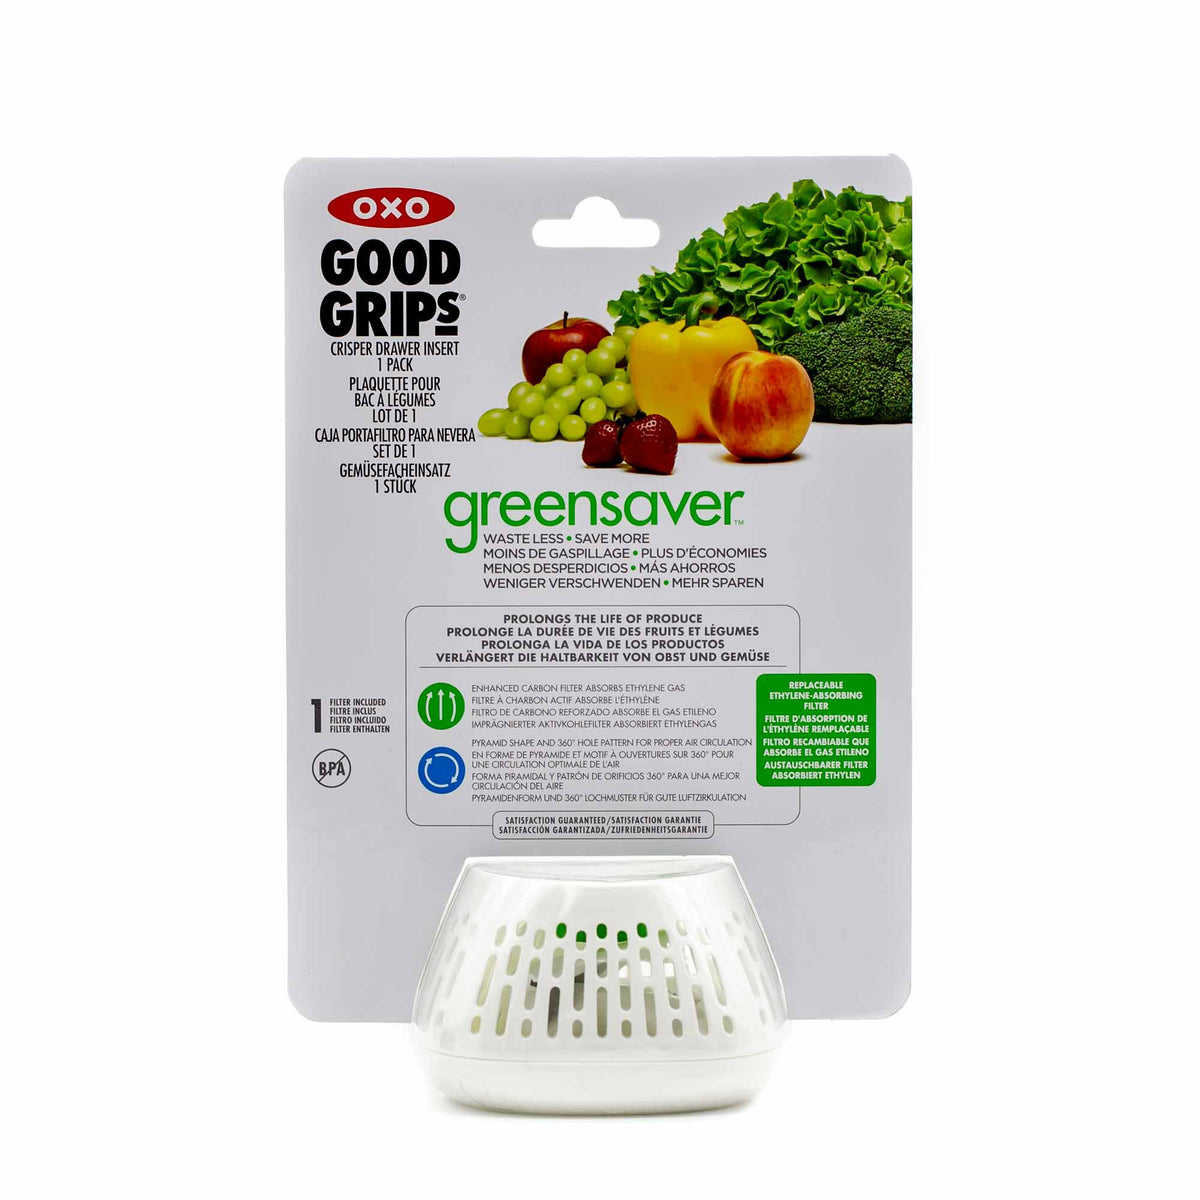 OXO Good Grips GreenSaver Carbon Filter Refills 4 Pack